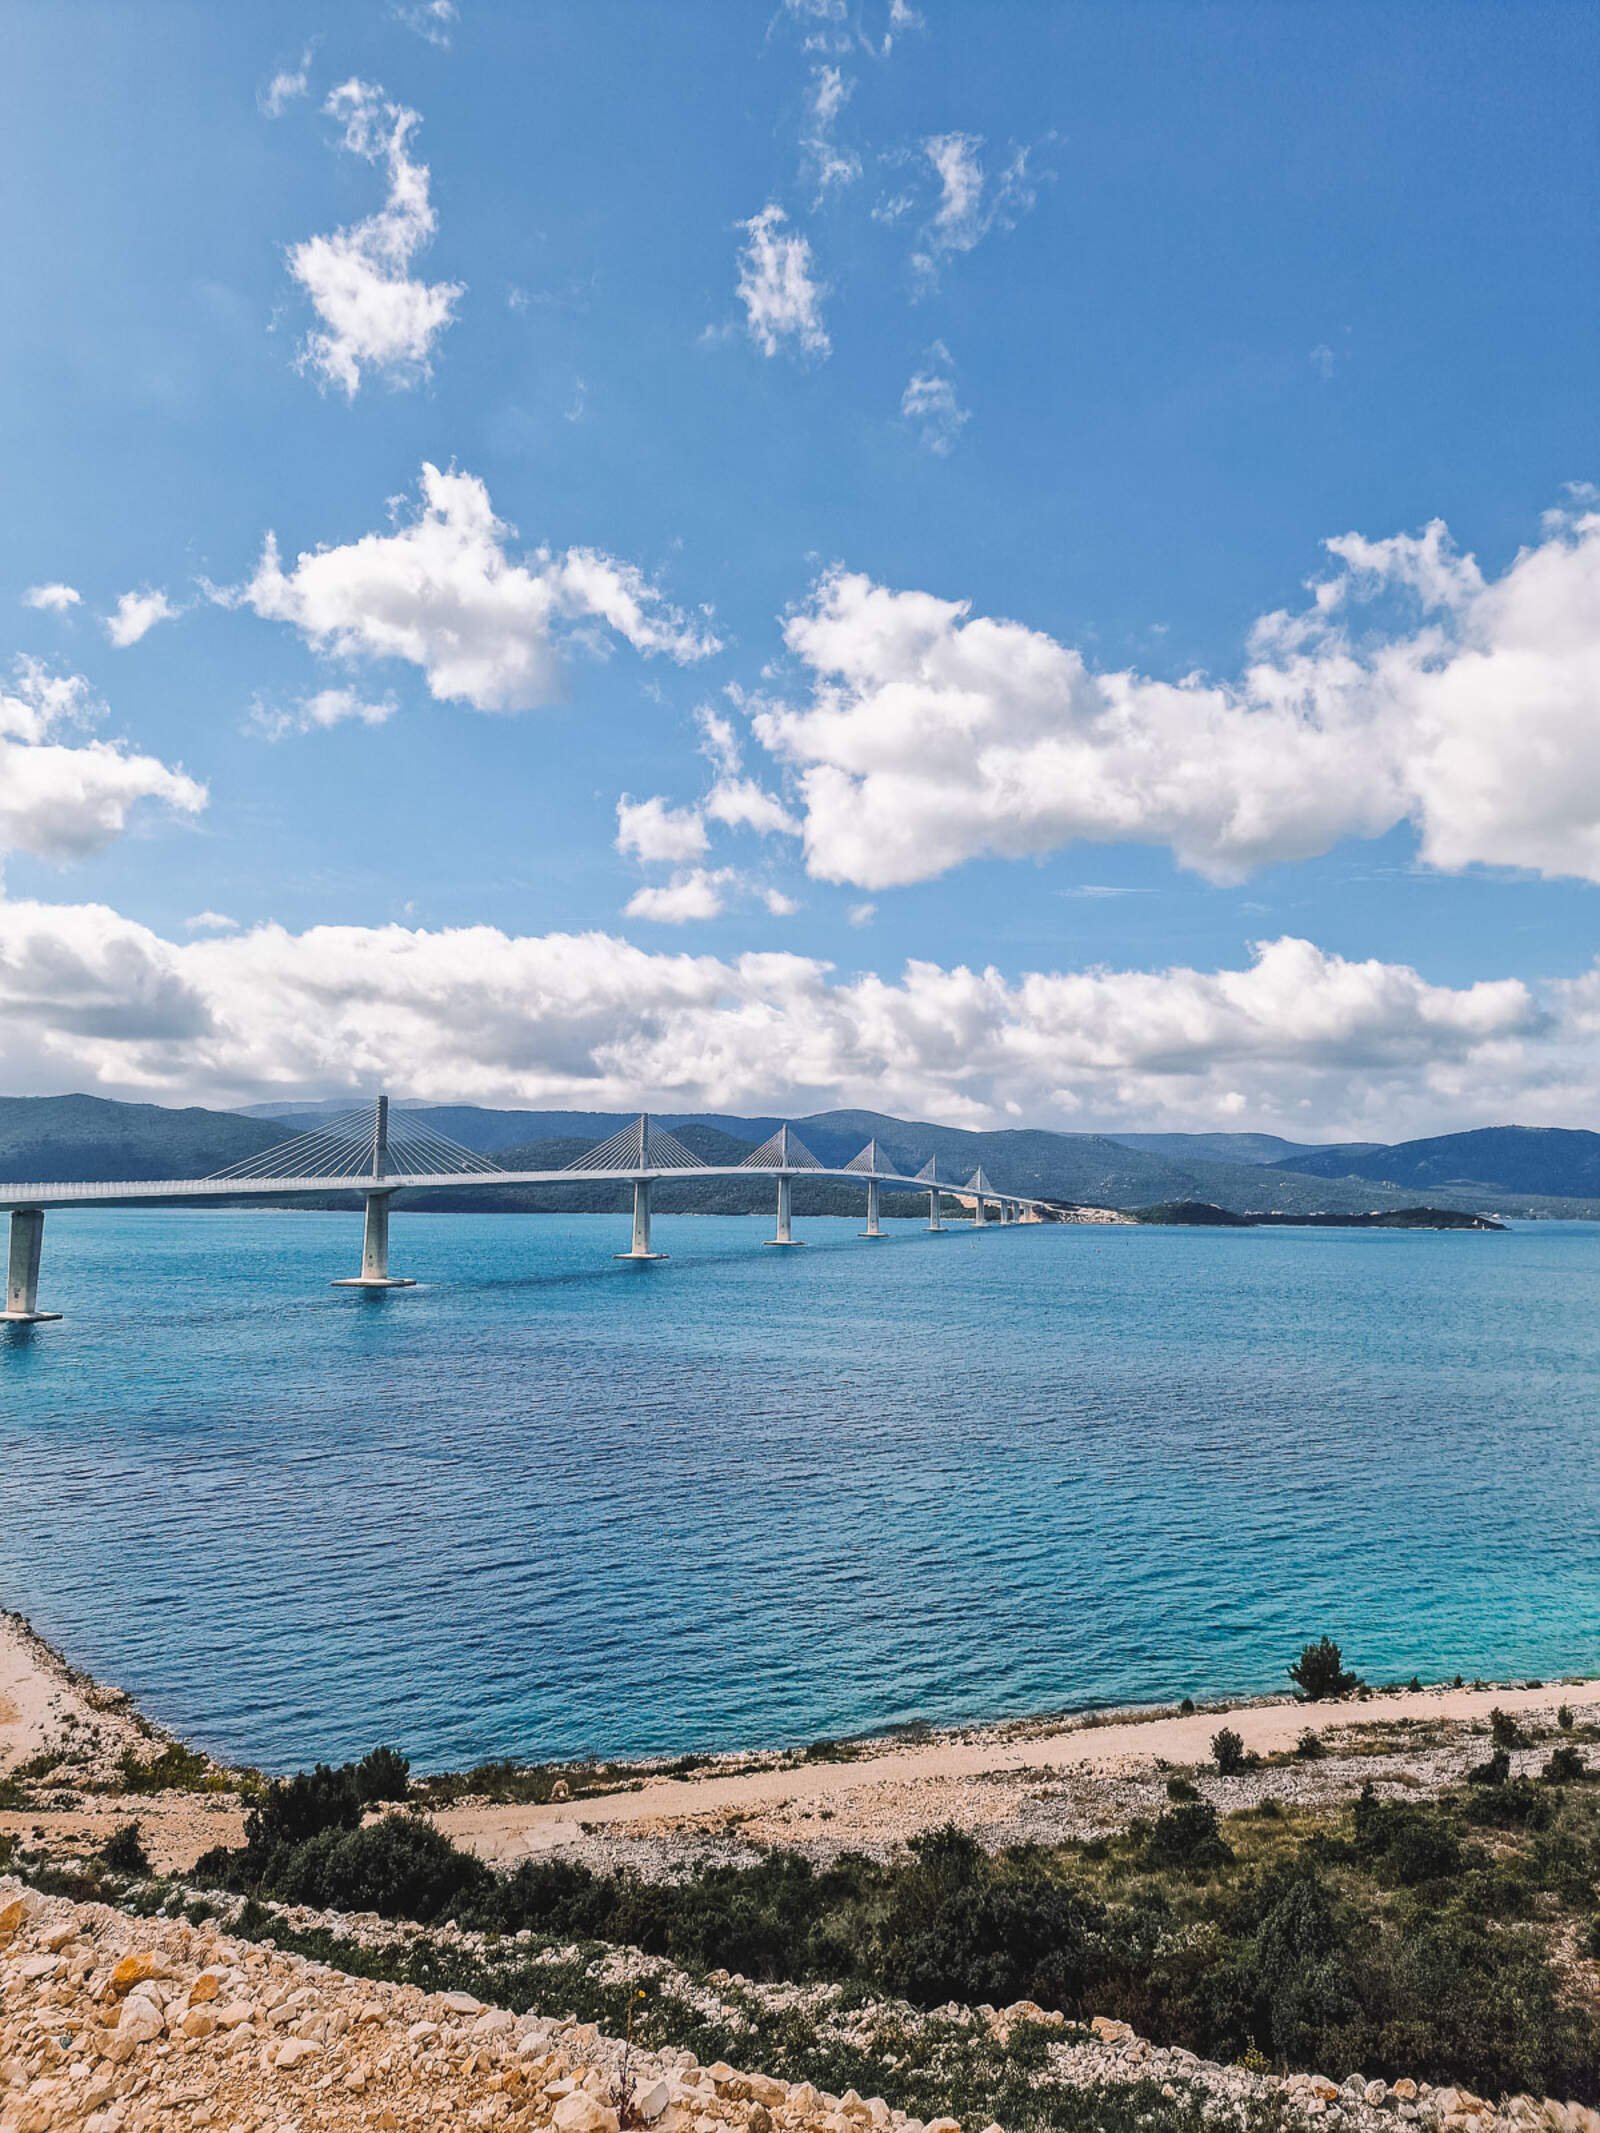 a long bridge crossing the sea between mainland Croatia and an island